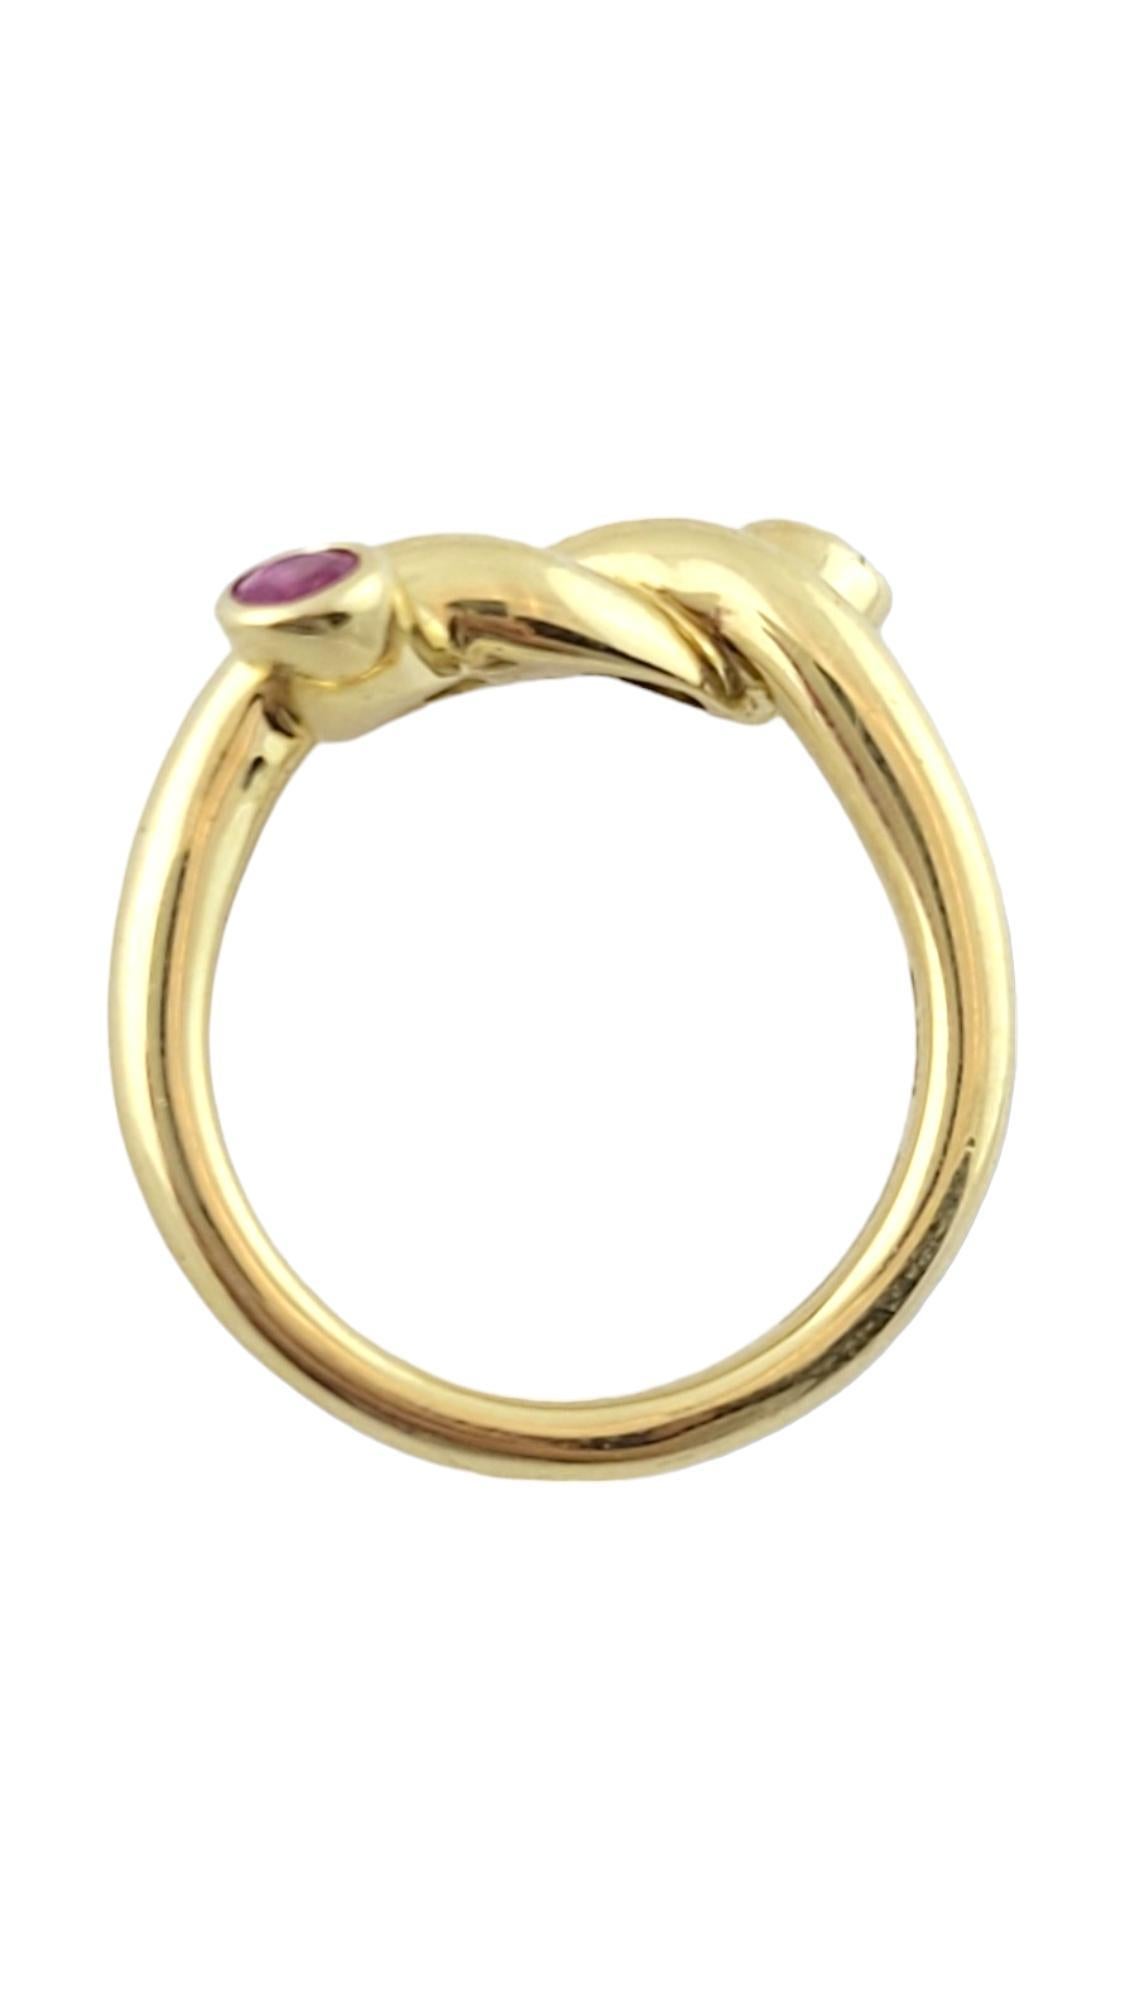 Round Cut Angela Cummings 18K Yellow Gold Ruby & Sapphire Ring Size 5.25 #16171